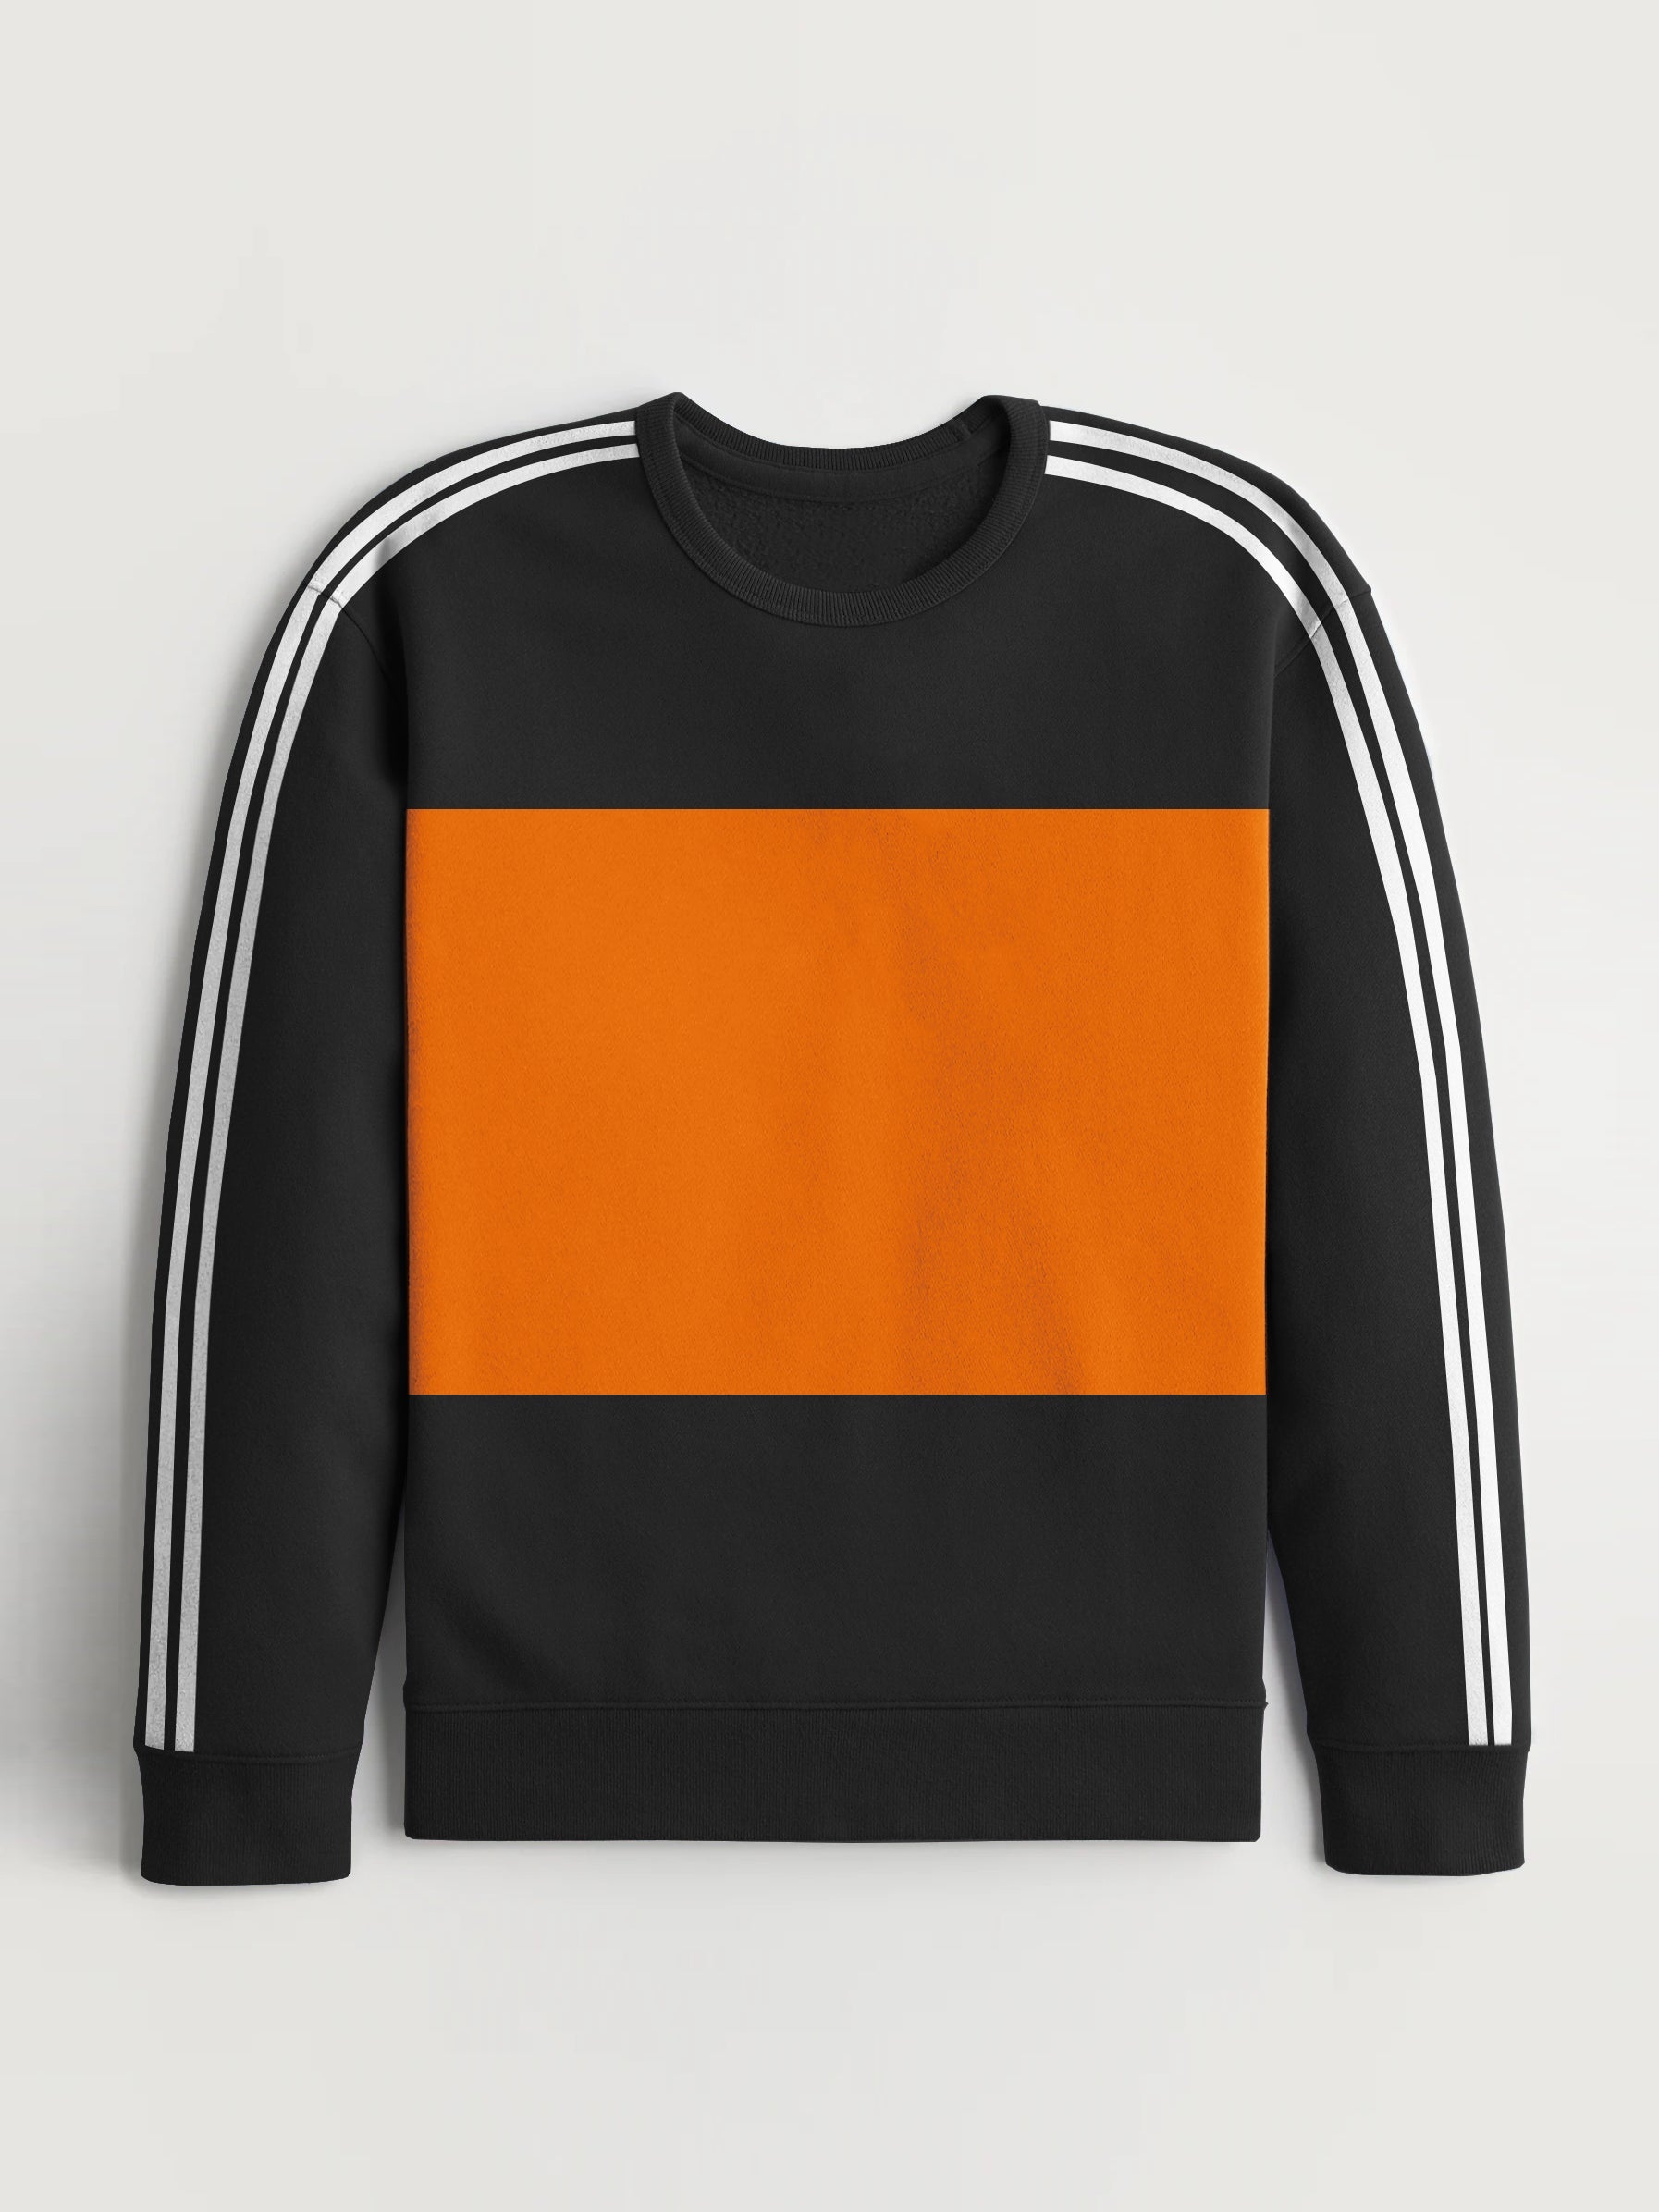 Premium Quality Crew Neck Fleece Sweatshirt For Men-Black With White Stripes-RT1674